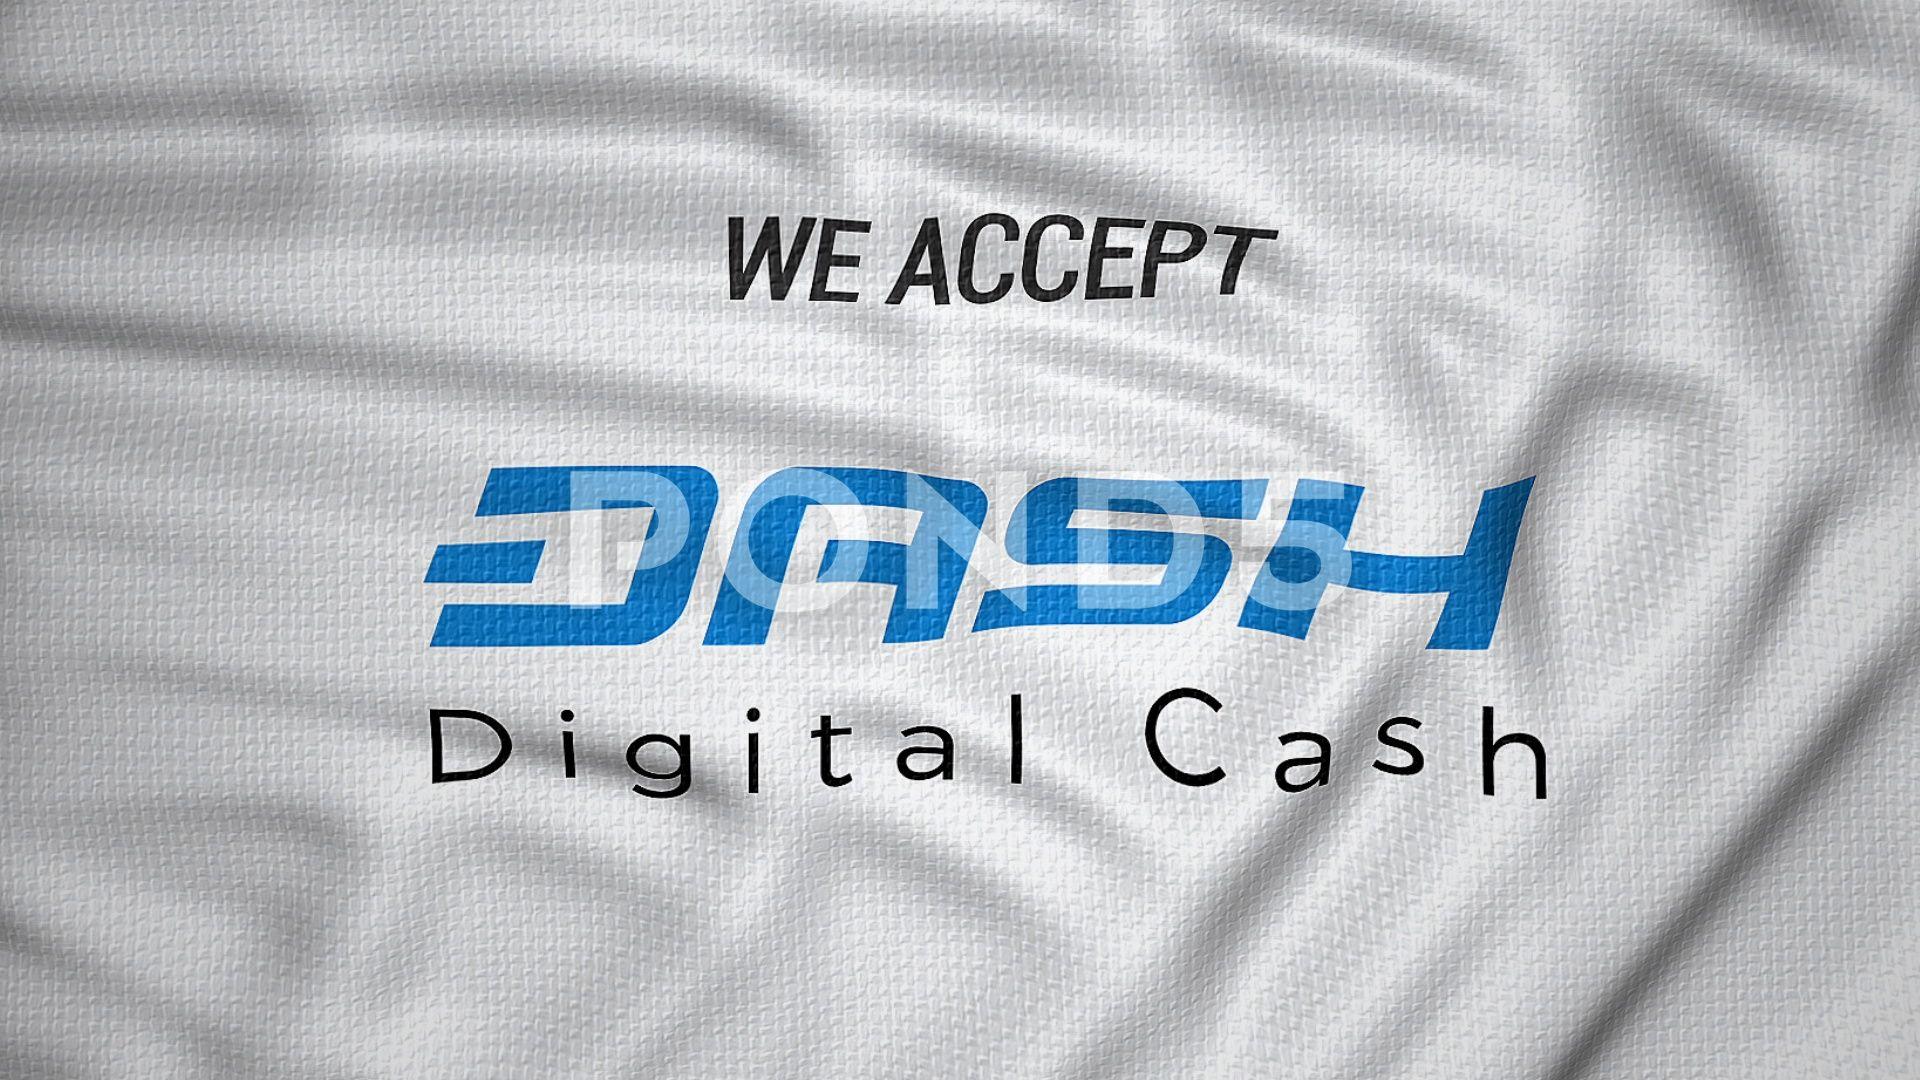 We Accept Cash Logo - We accept Dash digital cash logo animation video ~ Hi Res #83461361